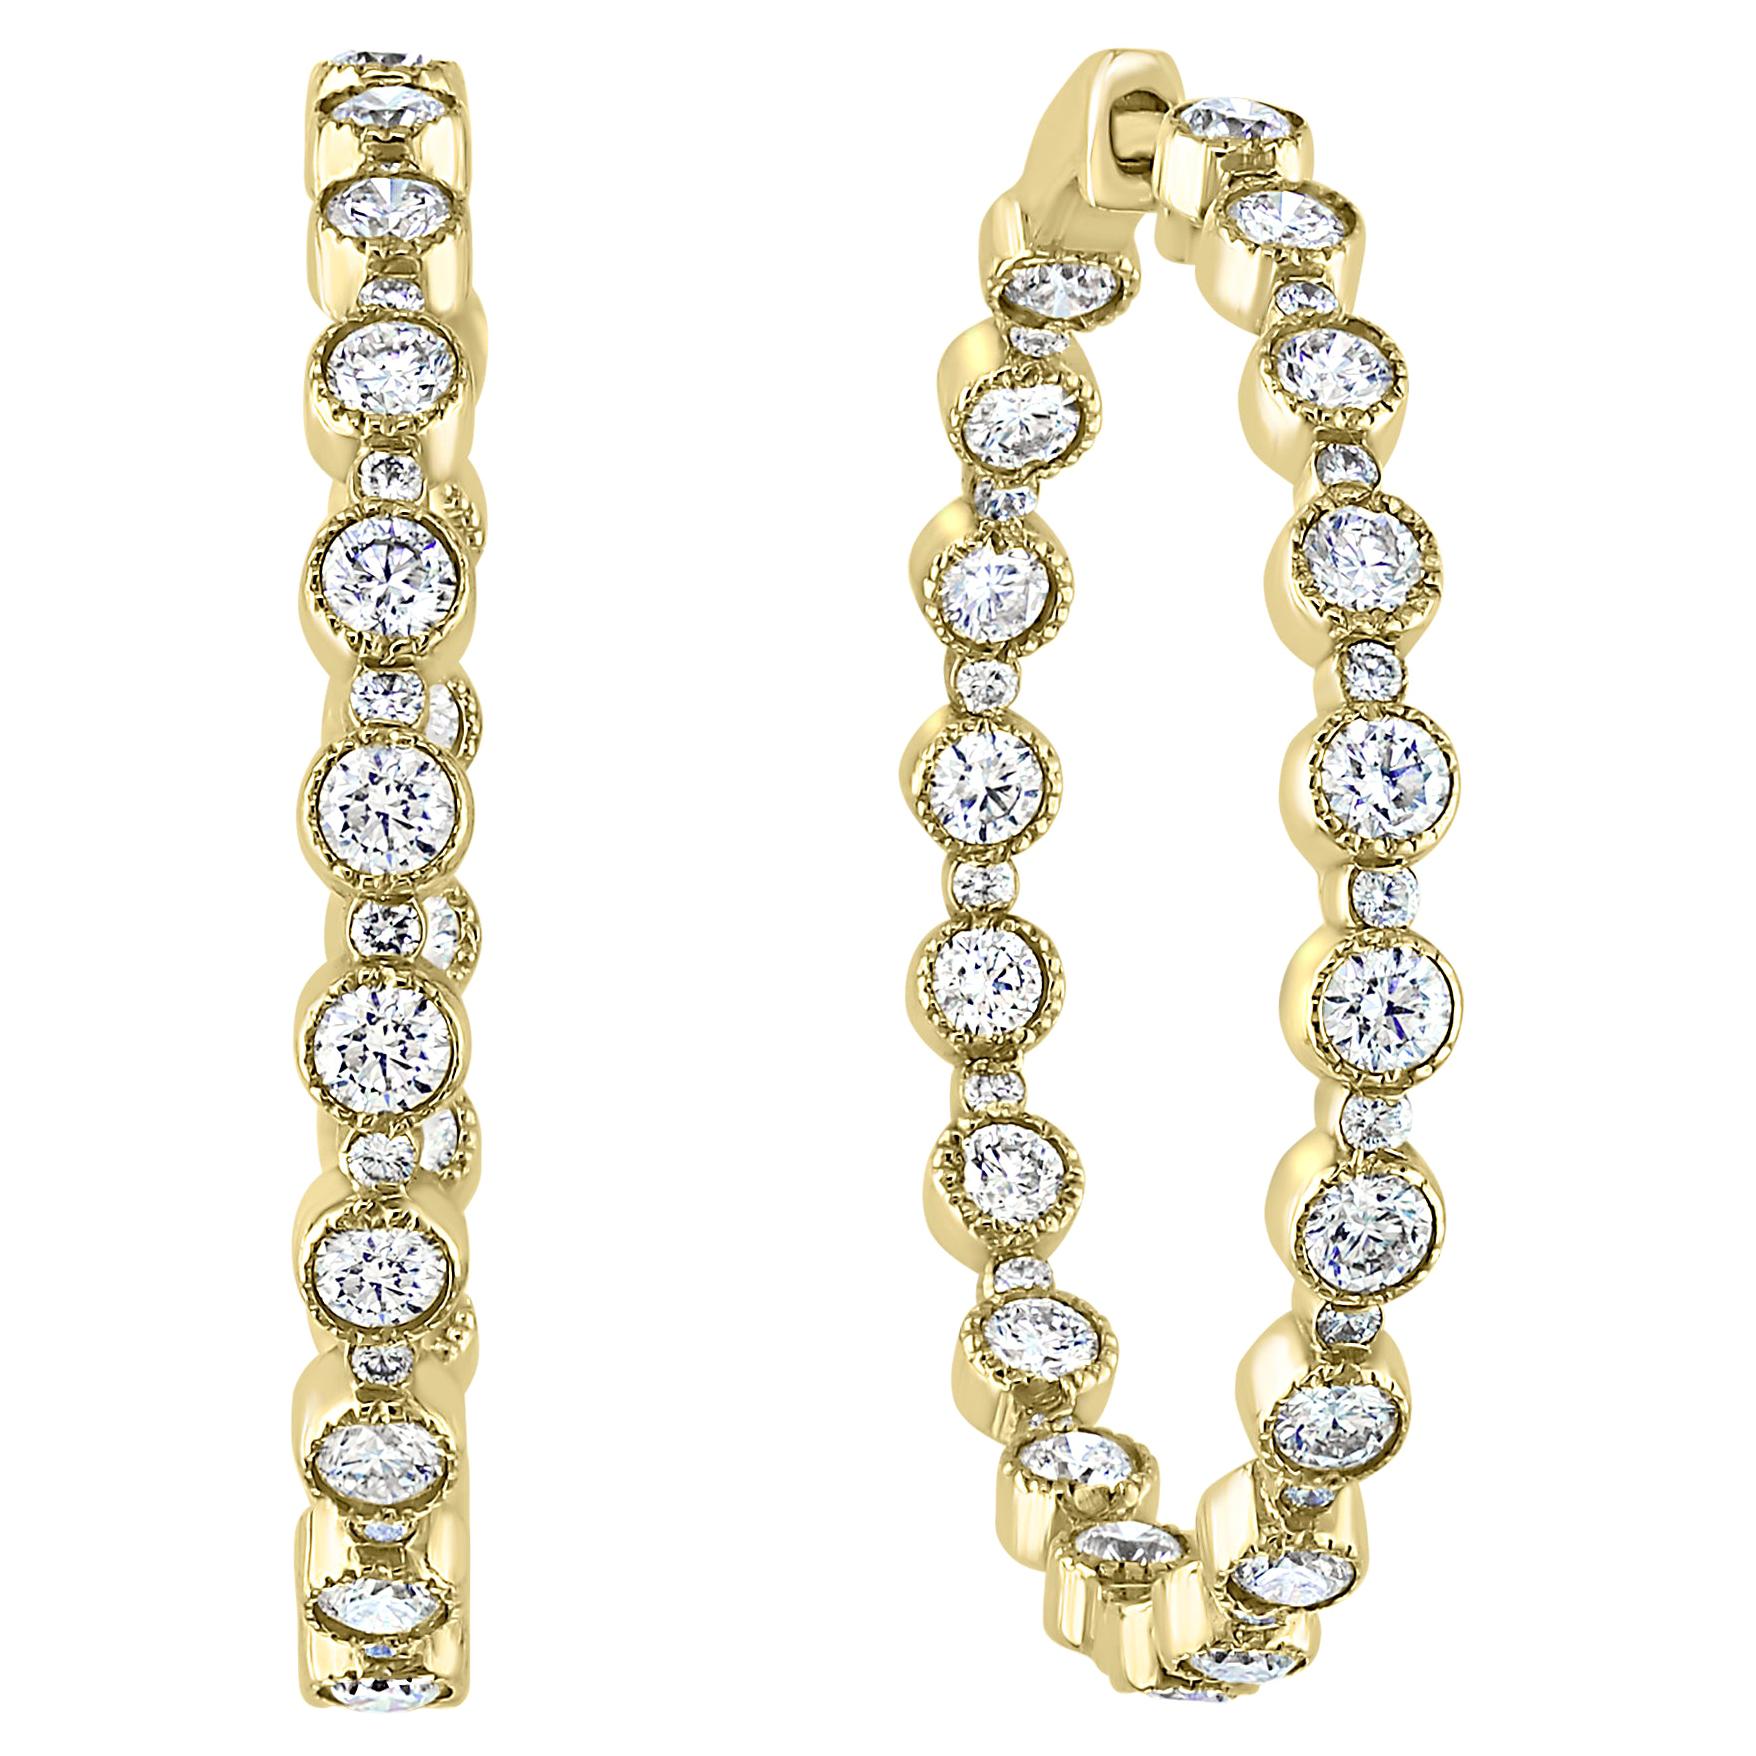 5.57 Carat Round Diamond Hoop Earrings in 14K Yellow Gold